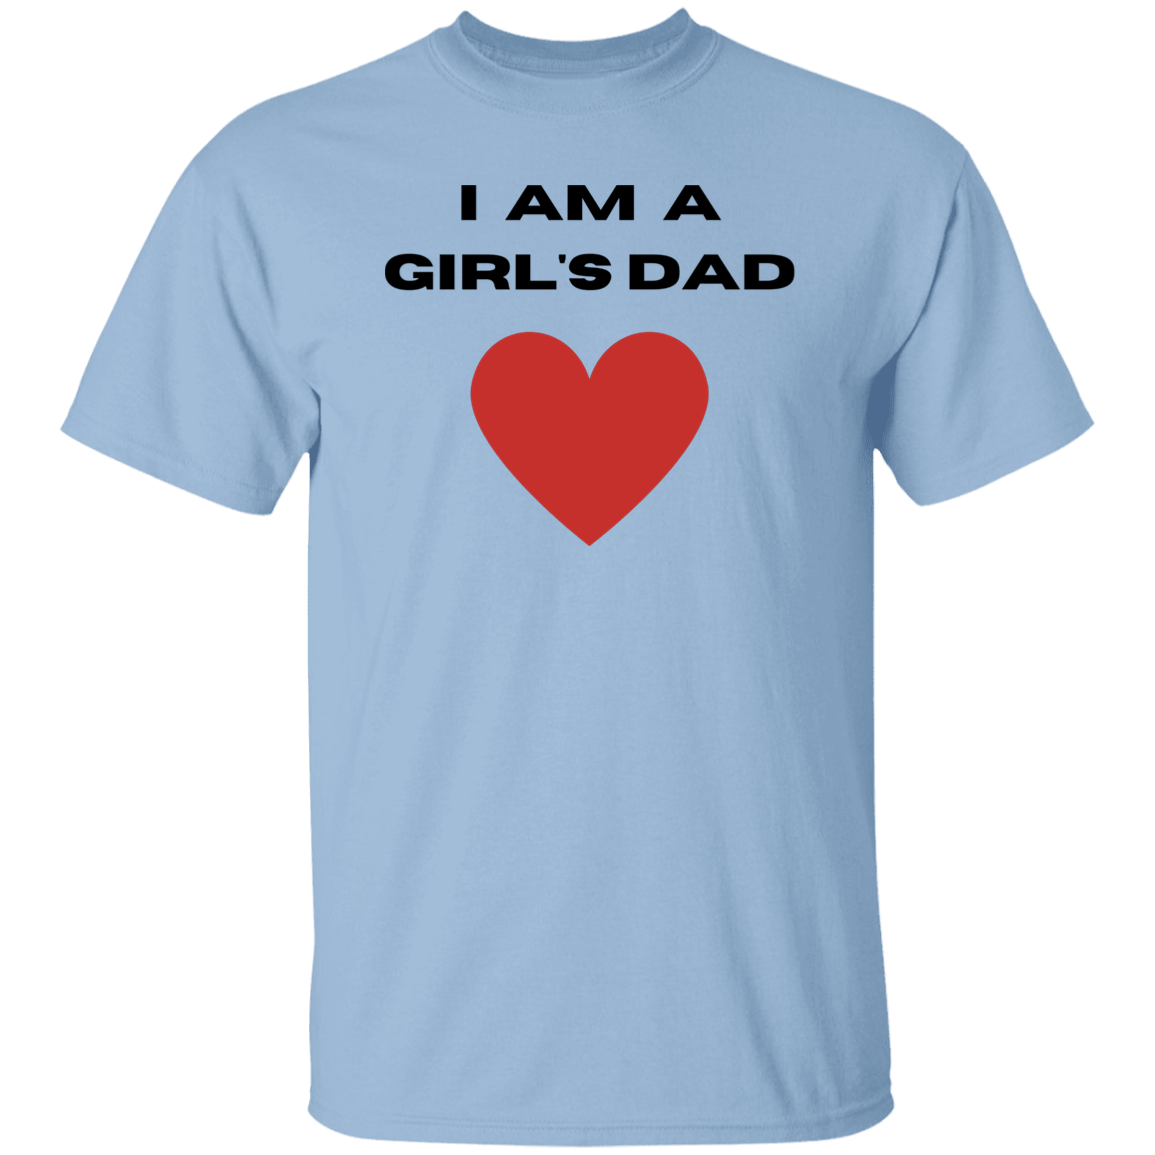 I'm A Girl's Dad T-Shirt